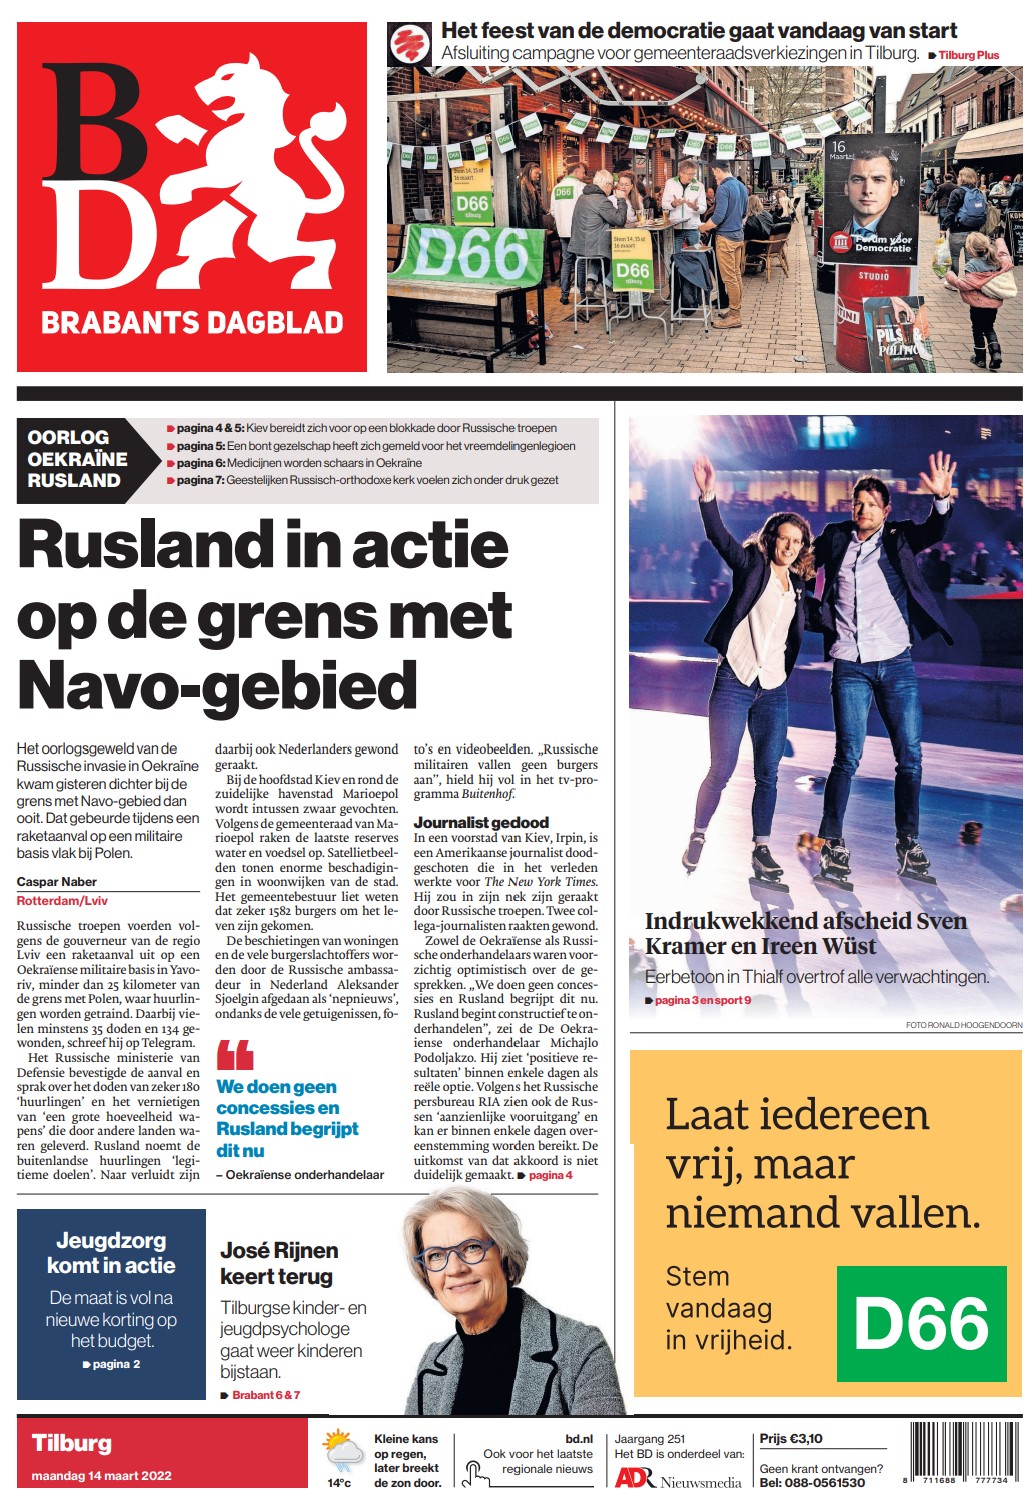 Brabanrs Dagblad - regio Tilburg - 14-03-2022